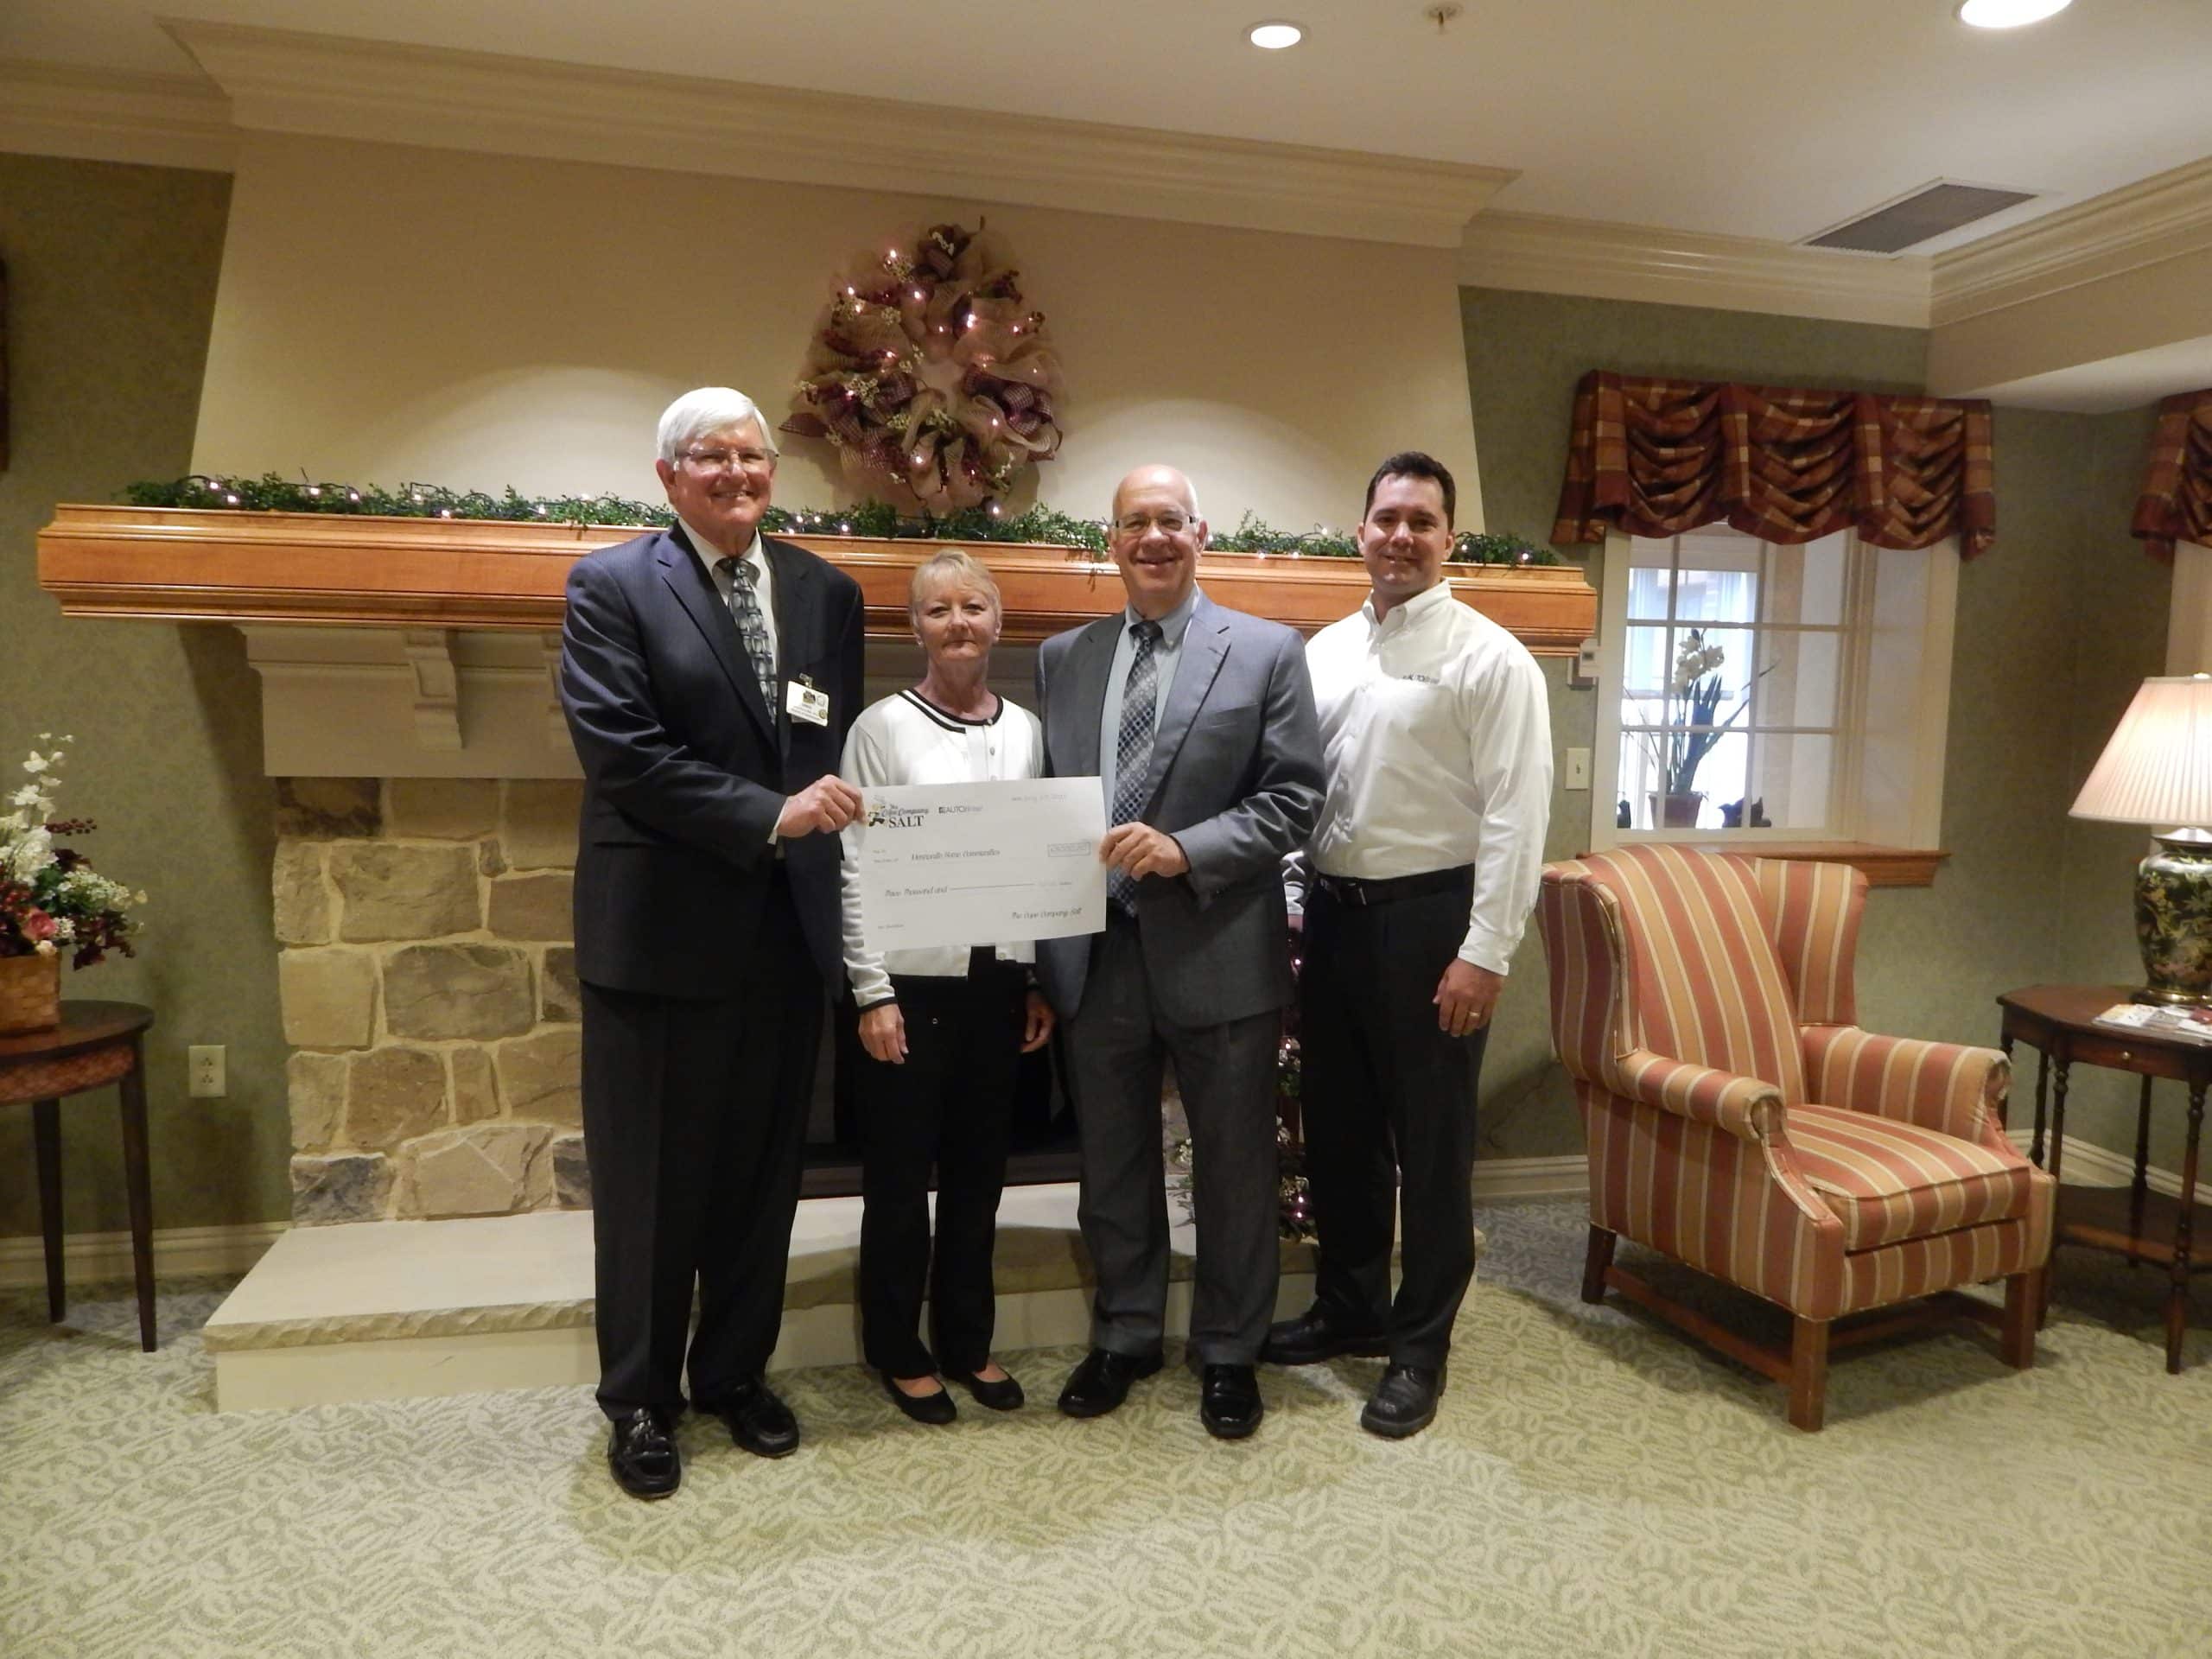 The Cope Company Salt Donates $3000 to Mennonite Home Communities